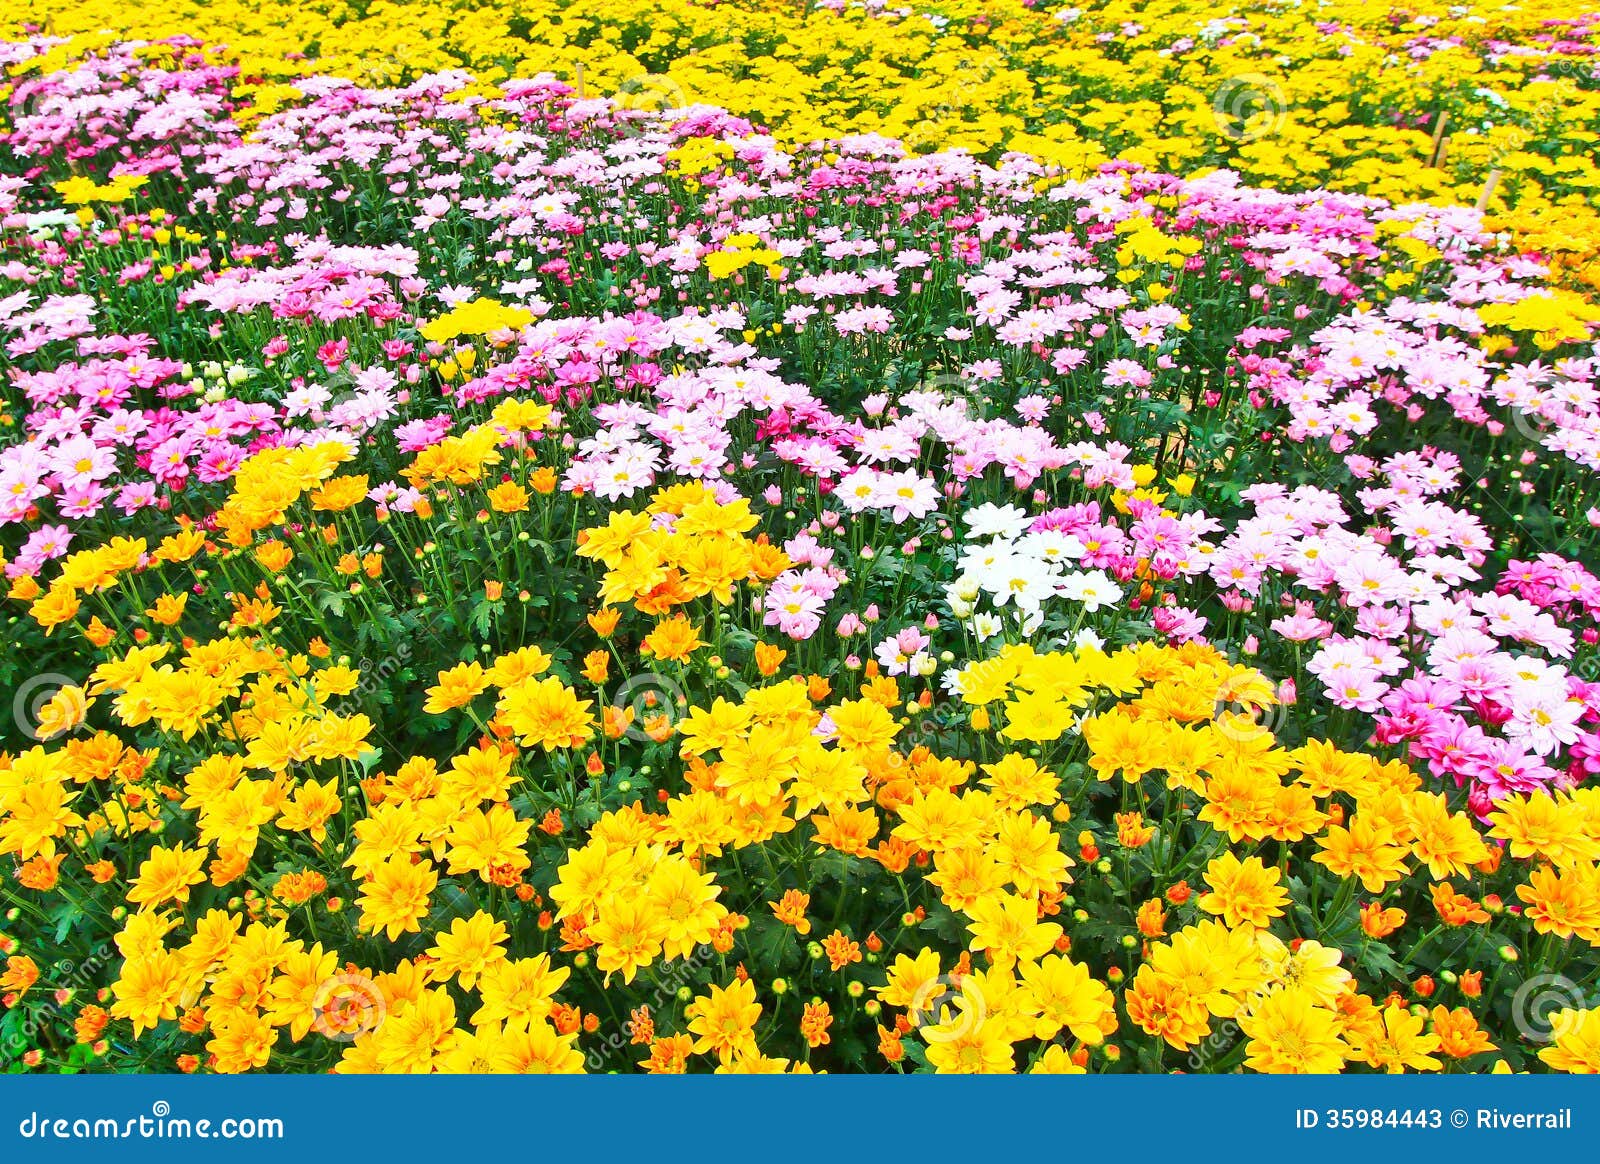 pinkchrysanthemumyellowonechrysanthemumsgarden35984443.jpg